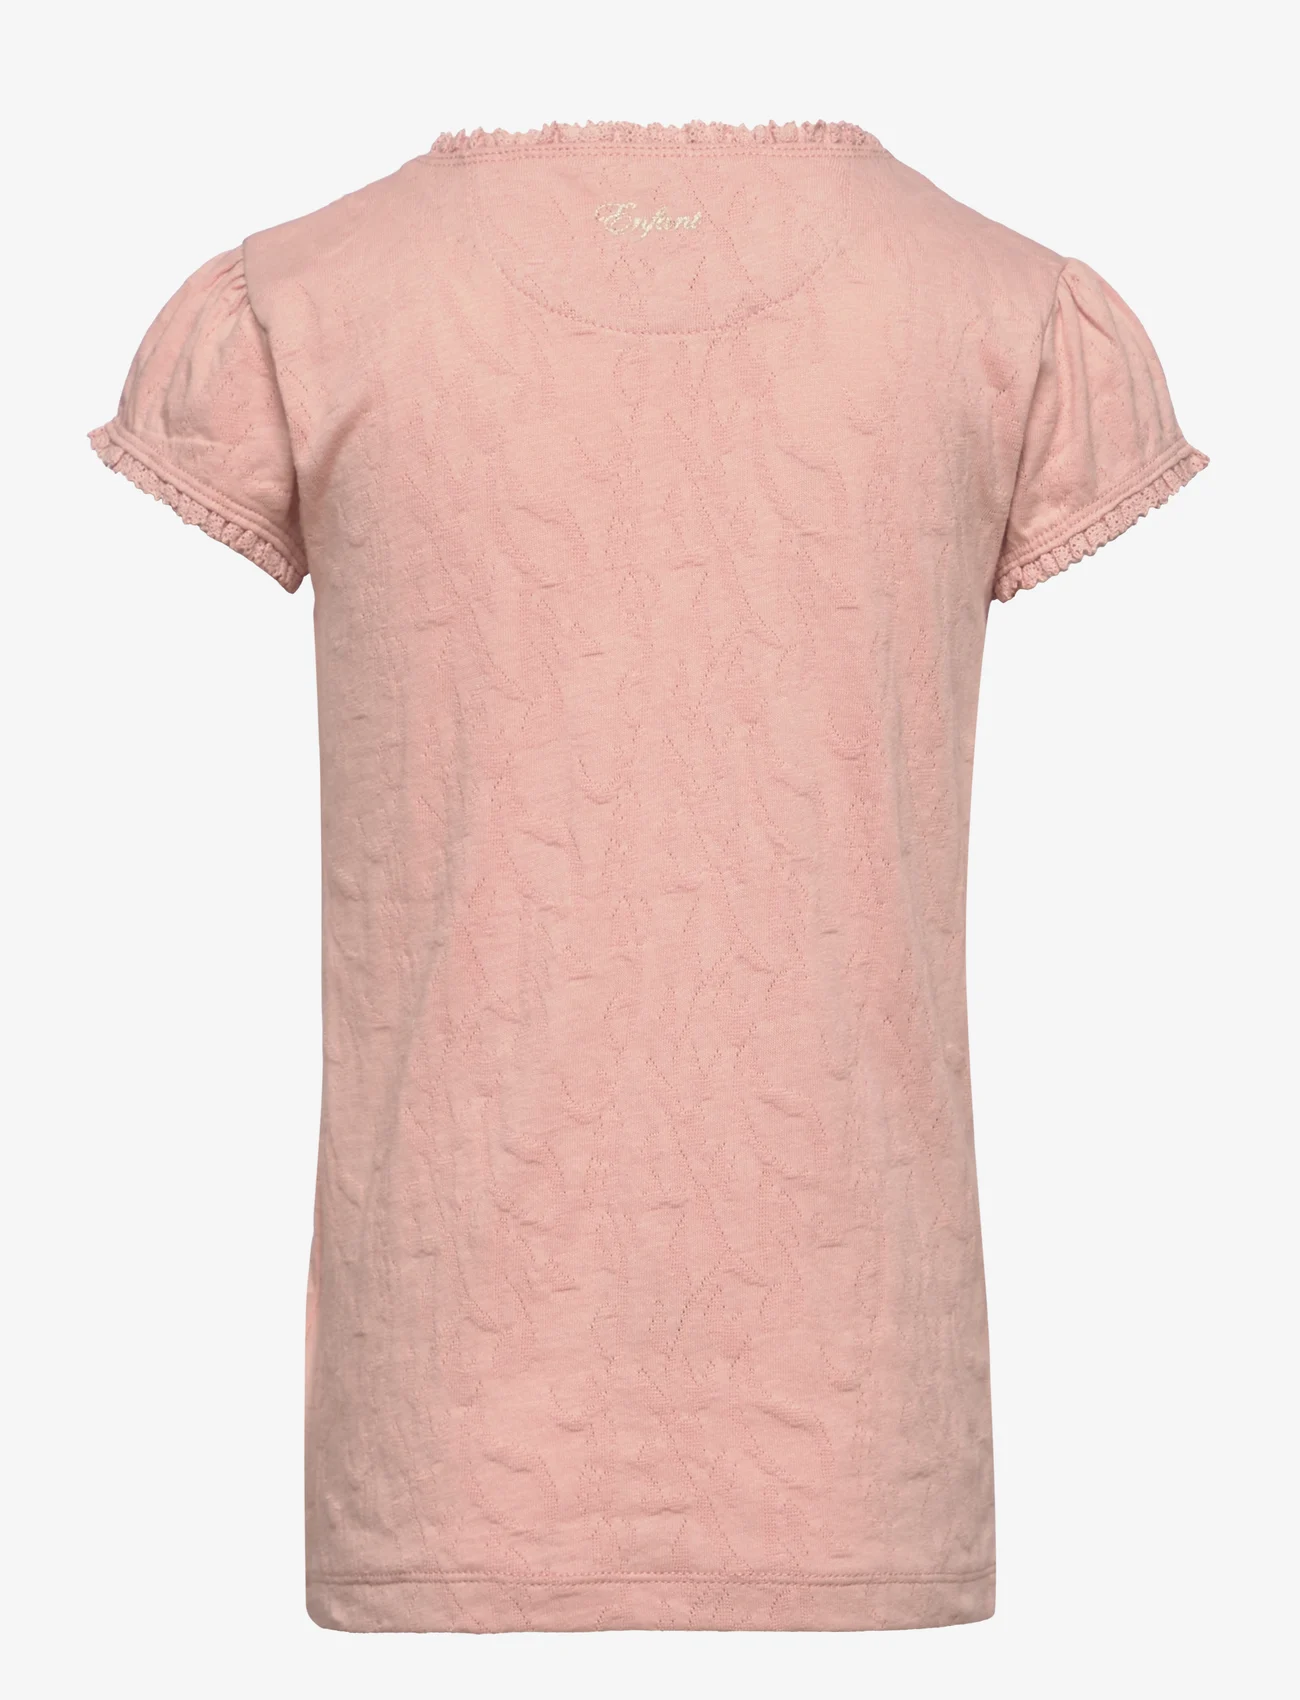 En Fant - T-shirt SS Jacquard - lühikeste varrukatega t-särgid - misty rose - 1